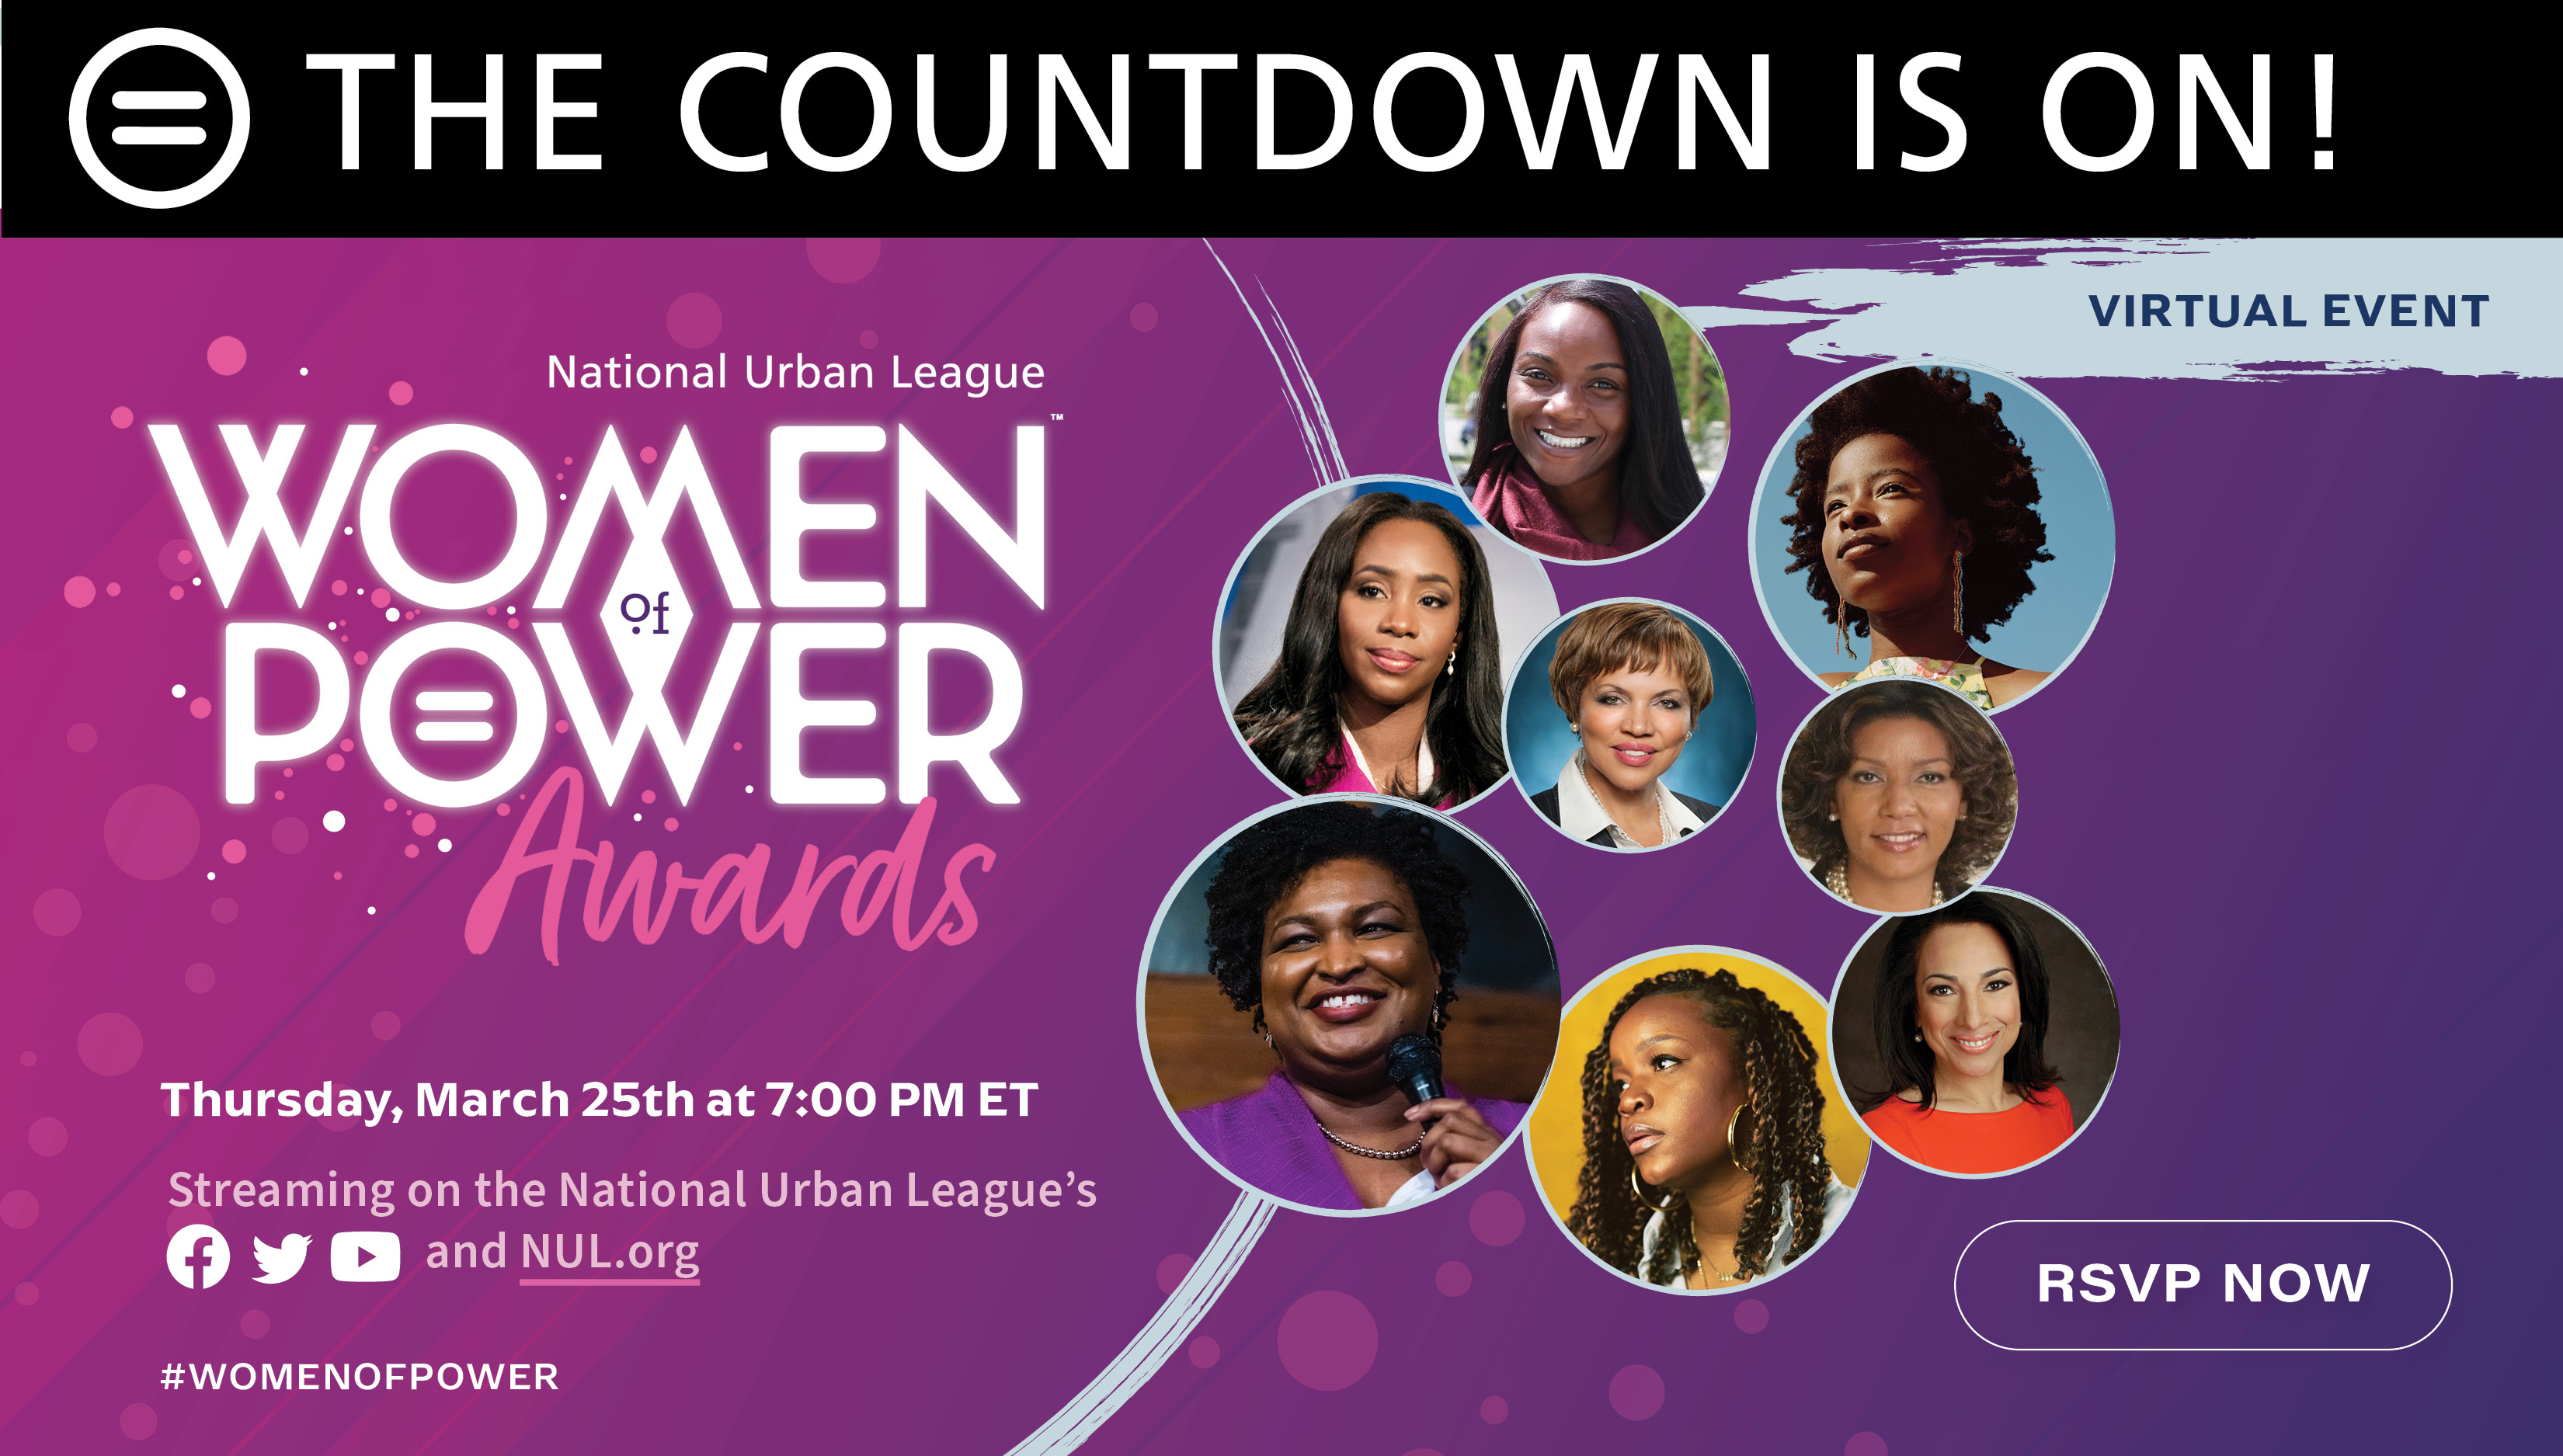 Women of Power Awards  National Urban League